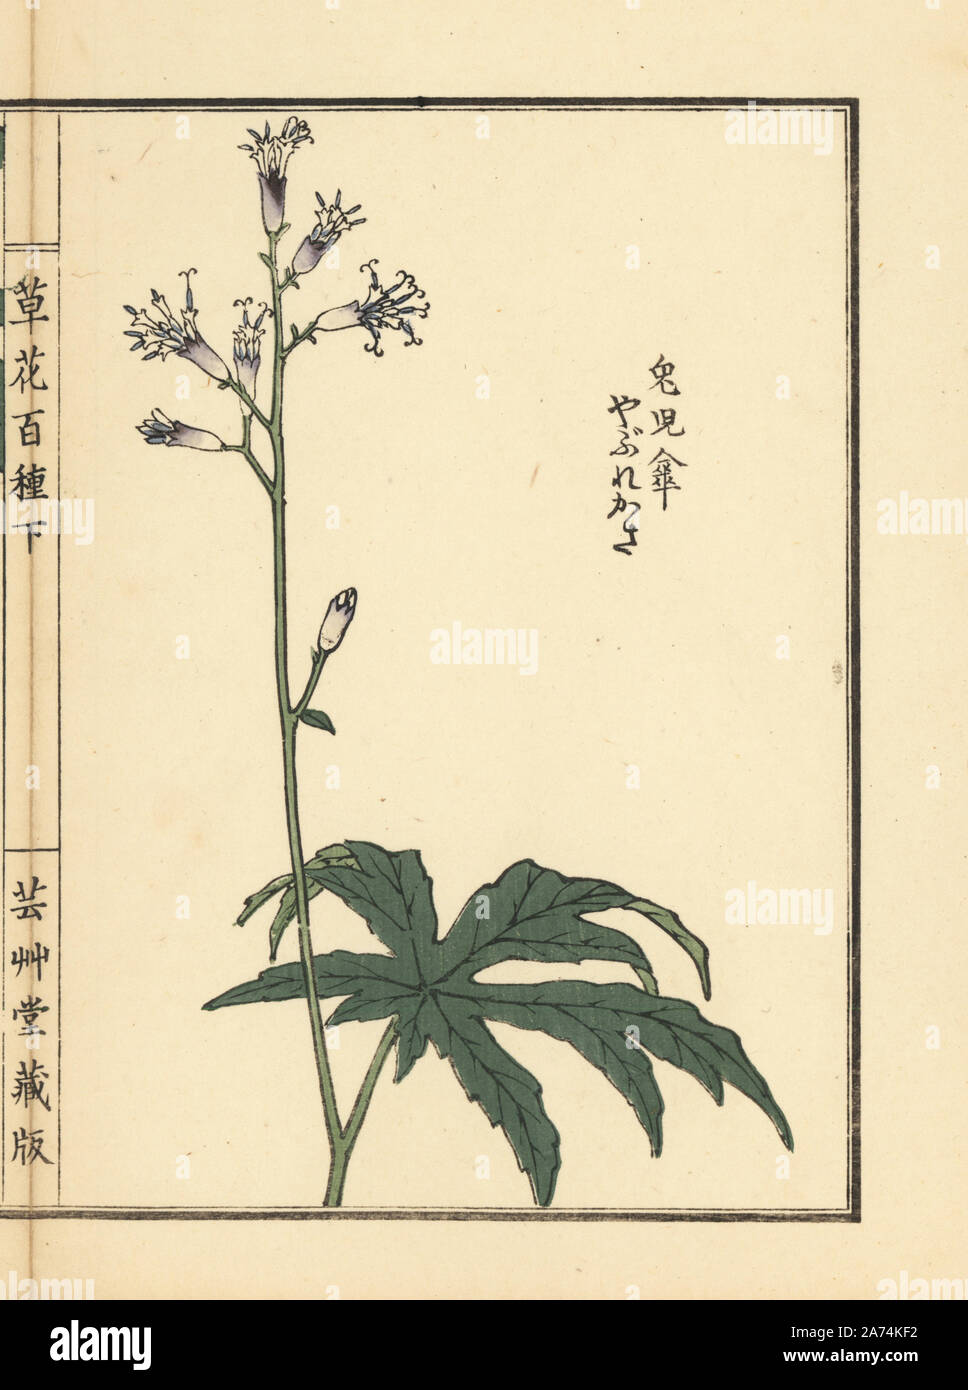 Yaburegasa or shredded umbrella plant, Syneilesis palmata. Handcoloured woodblock print by Kono Bairei from Kusa Bana Hyakushu (One Hundred Varieties of Flowers), Tokyo, Yamada, 1901. Stock Photo